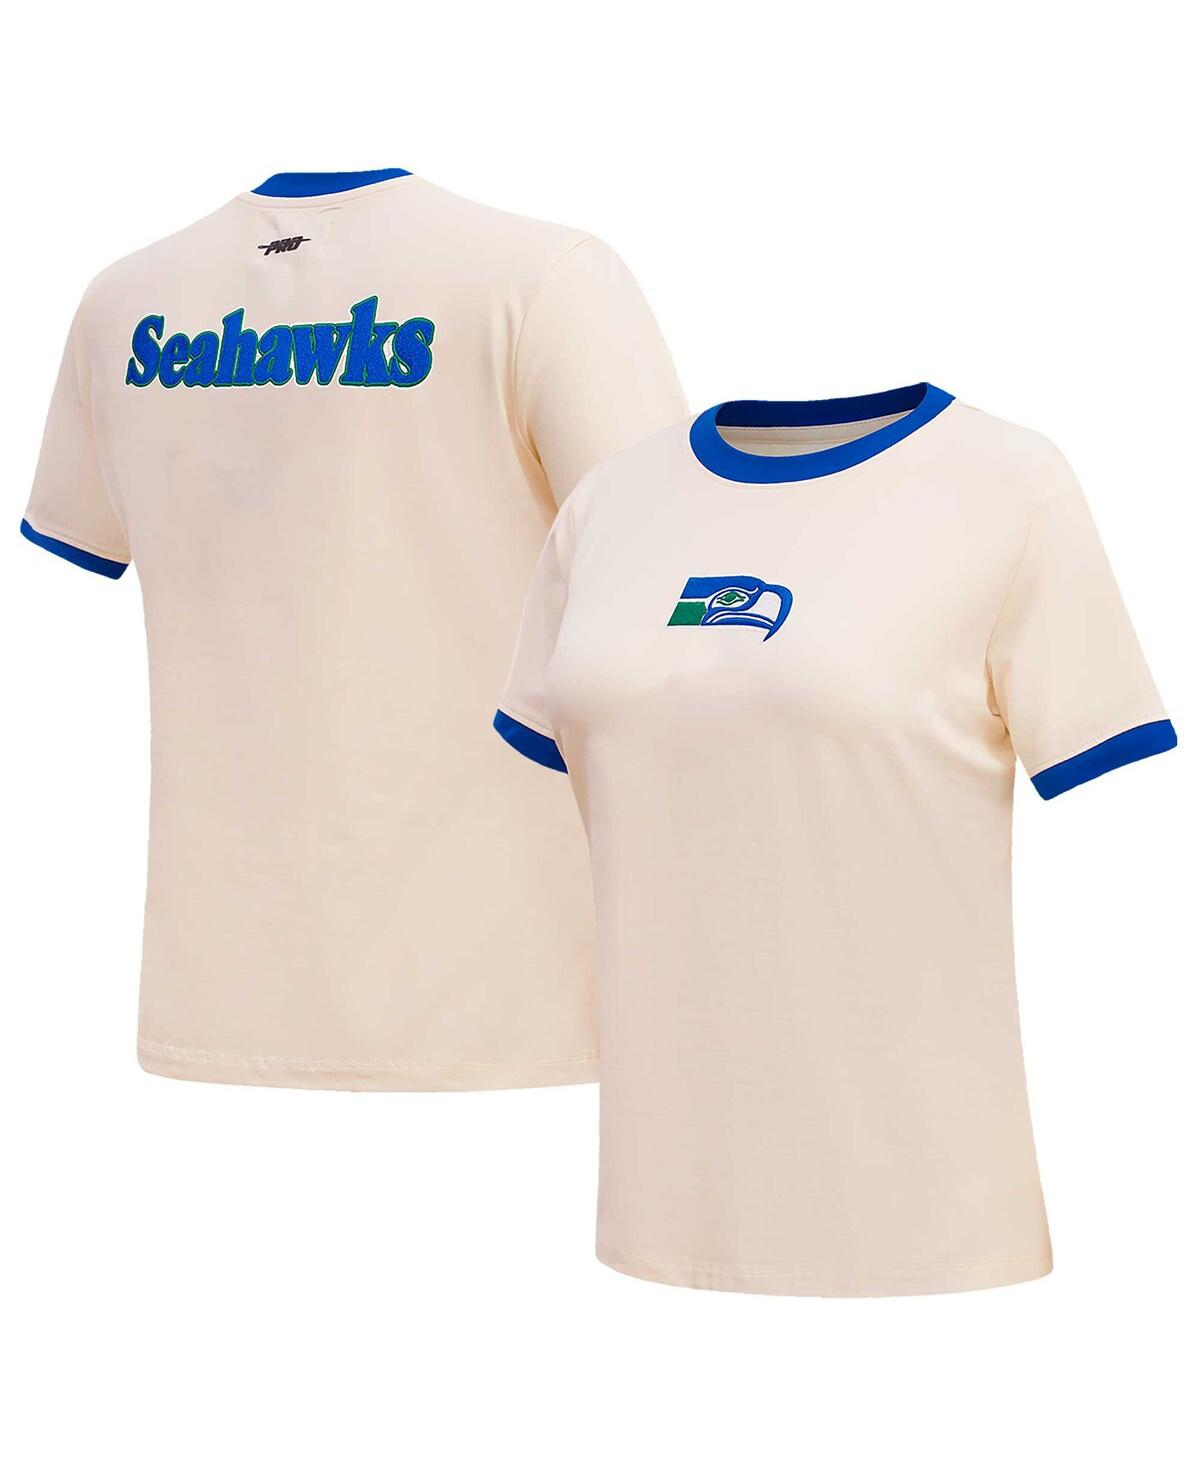 Shop Pro Standard Women's  Cream Distressed Seattle Seahawks Retro Classic Ringer T-shirt